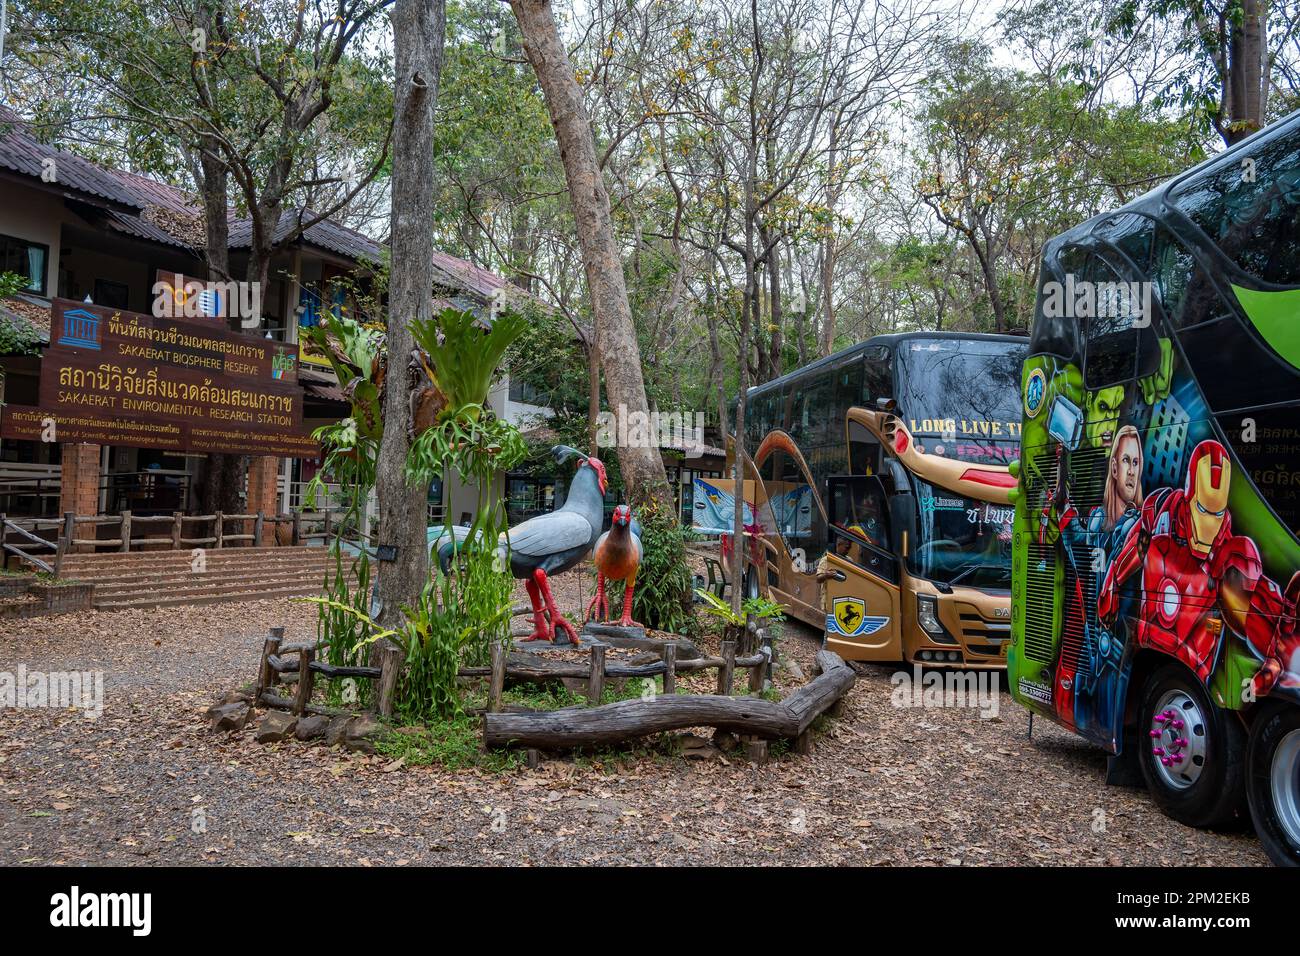 Autobus che trasportano turisti per visitare Sakaerat Environmental Research Station, Udom SAP, Thailandia. Foto Stock